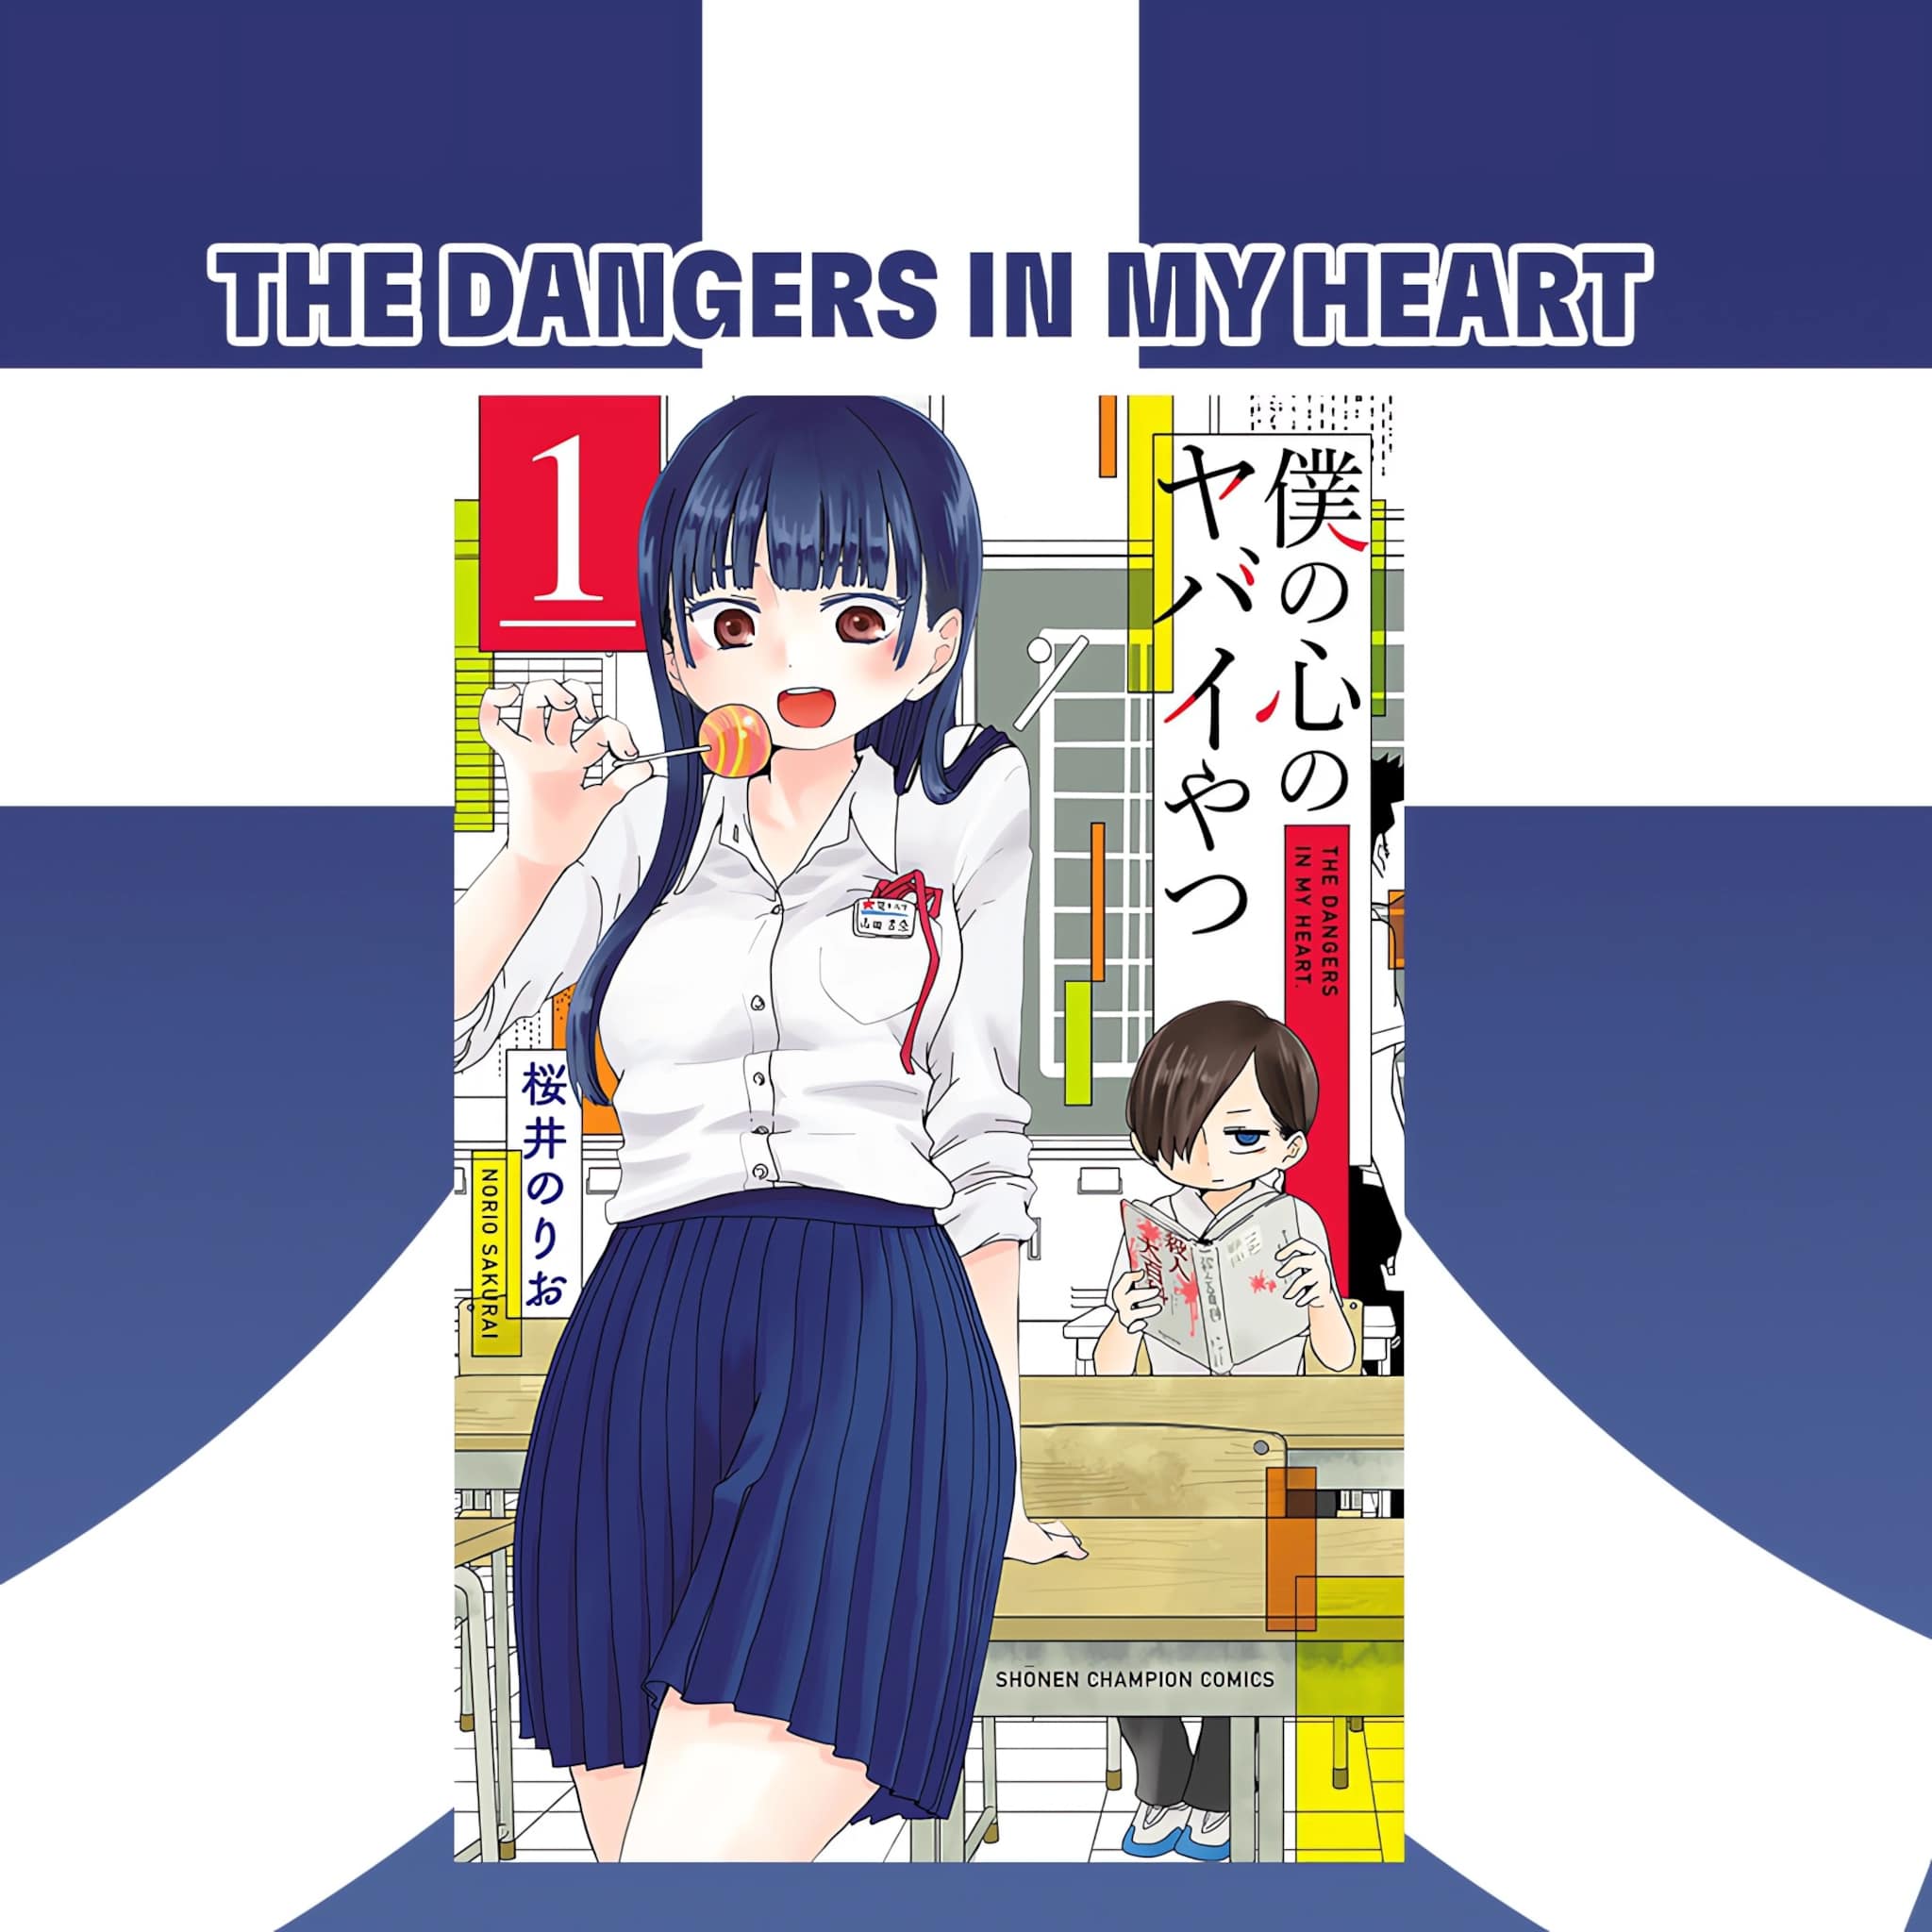 Annonce de la date de sortie en France du manga The Dangers in my Heart, aux éditions Kana